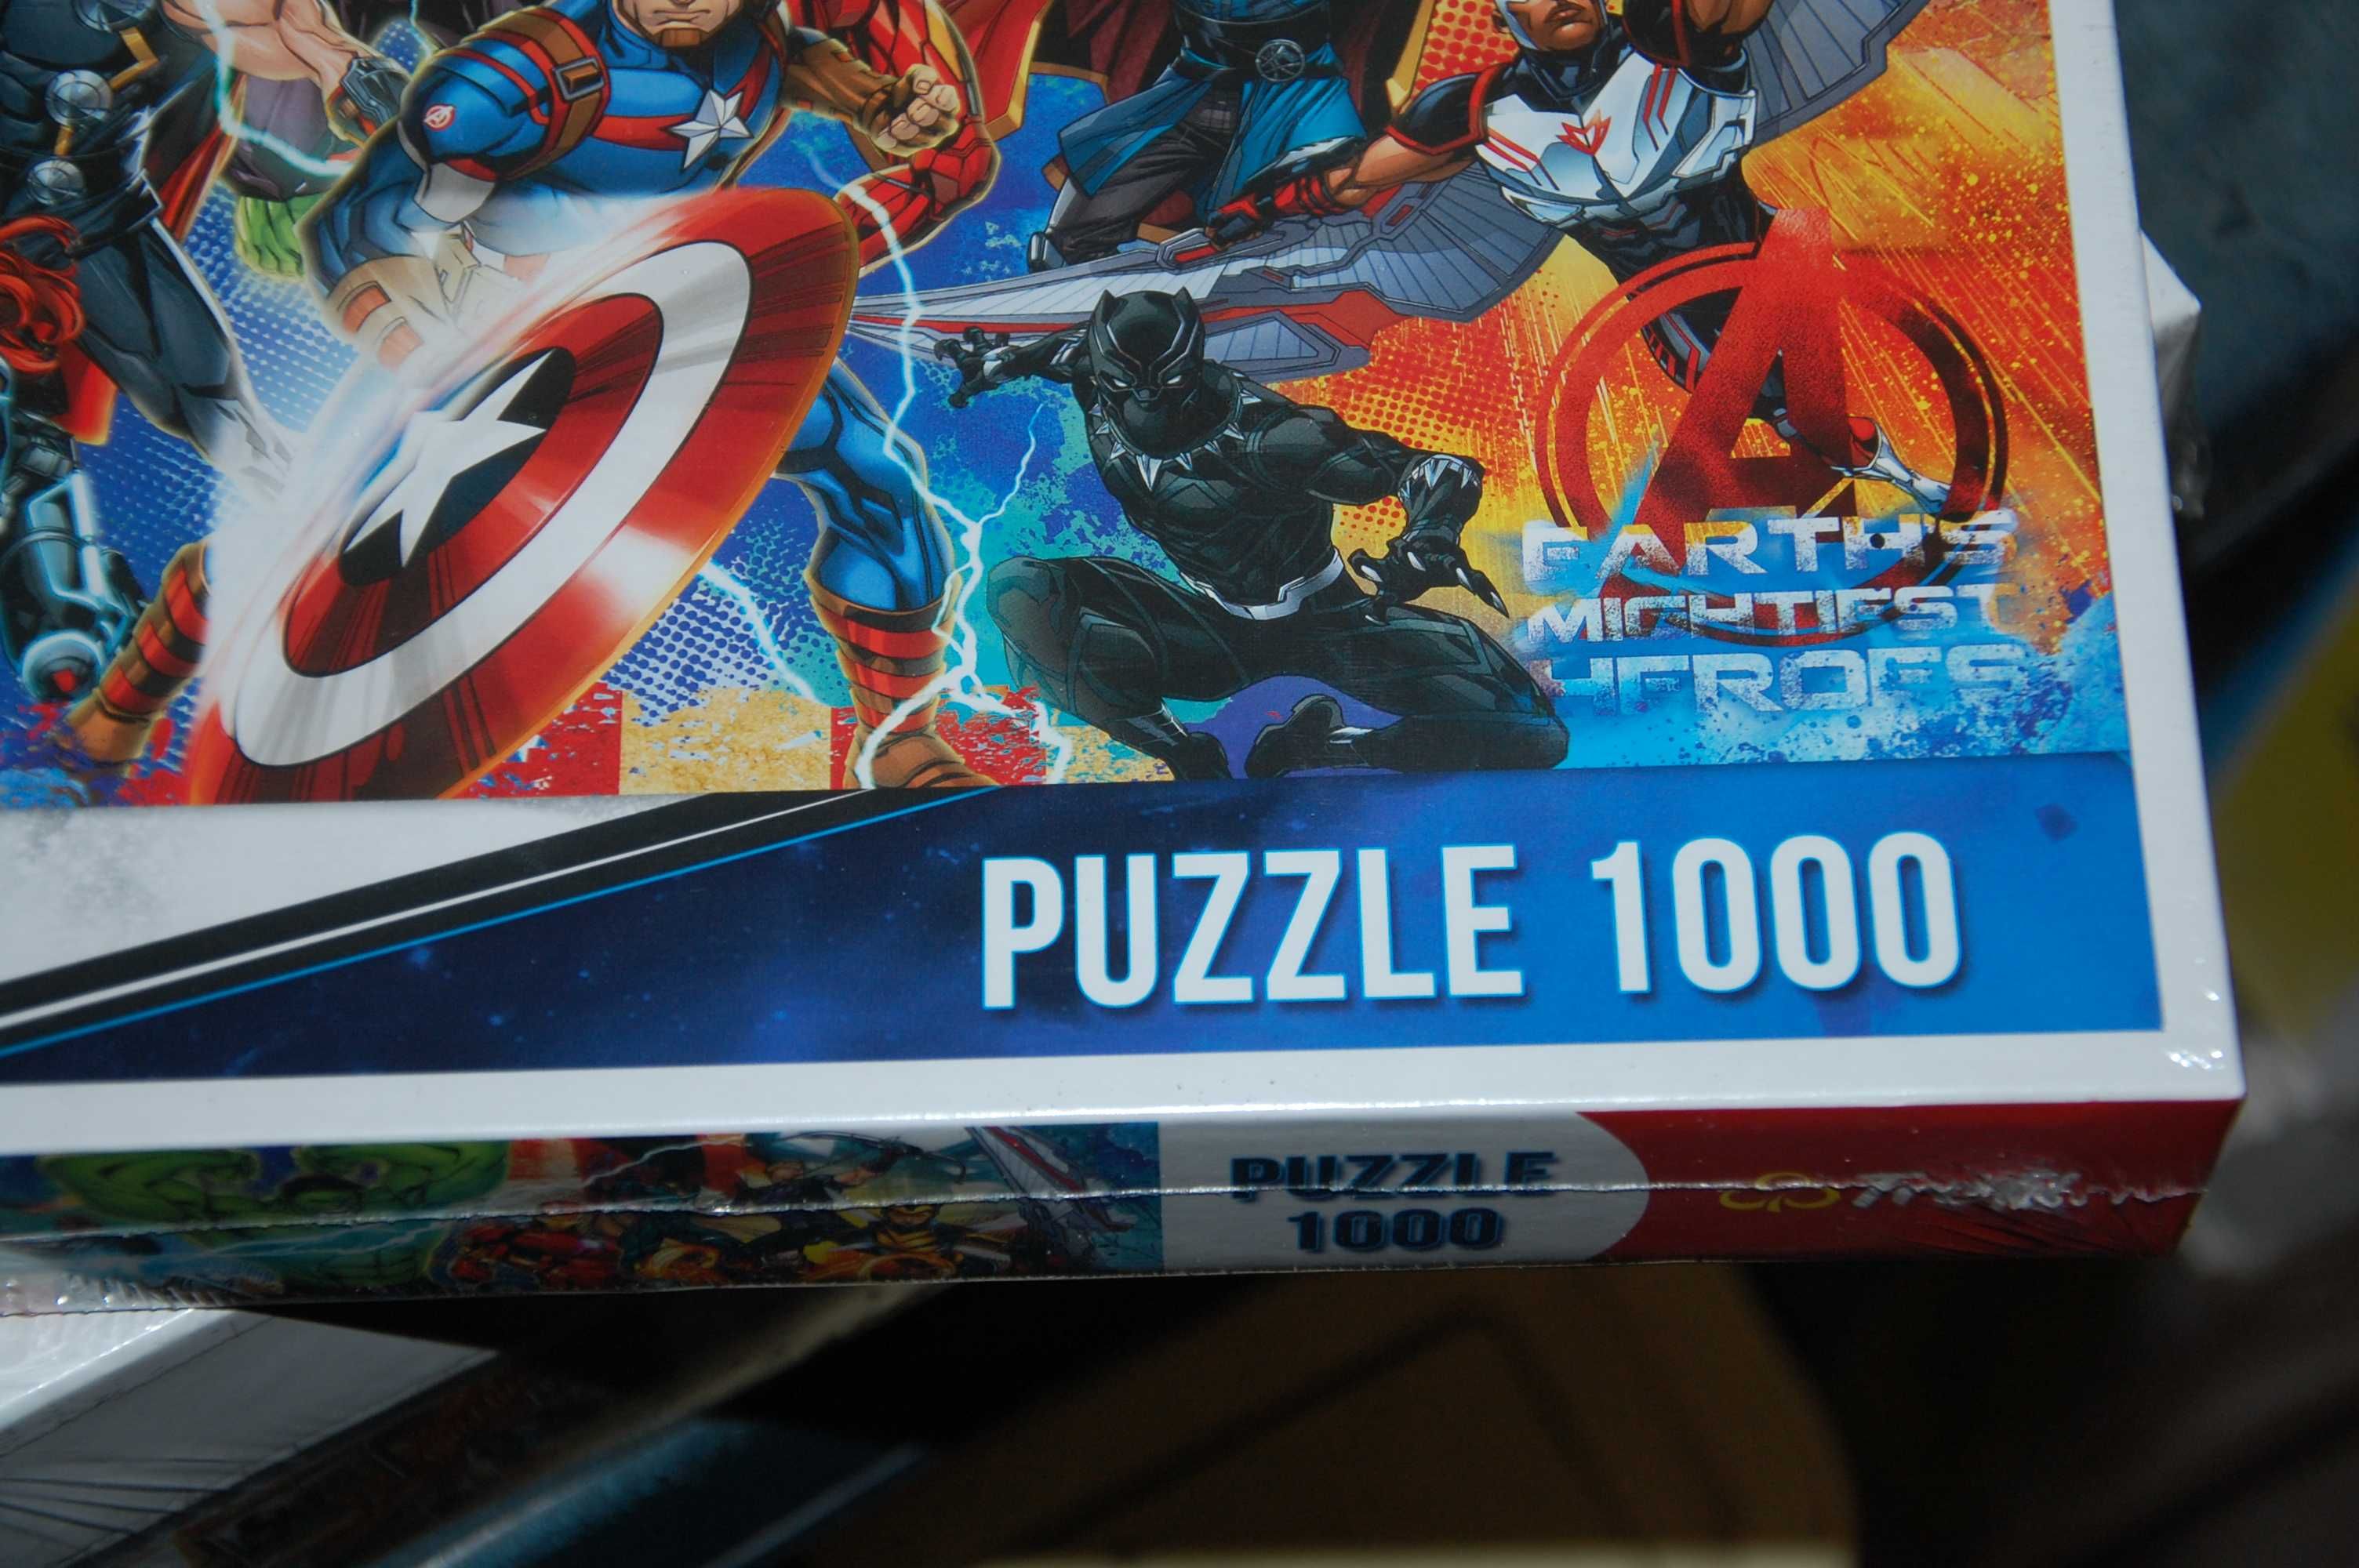 nowe puzzle AVENGERS  1000elementow